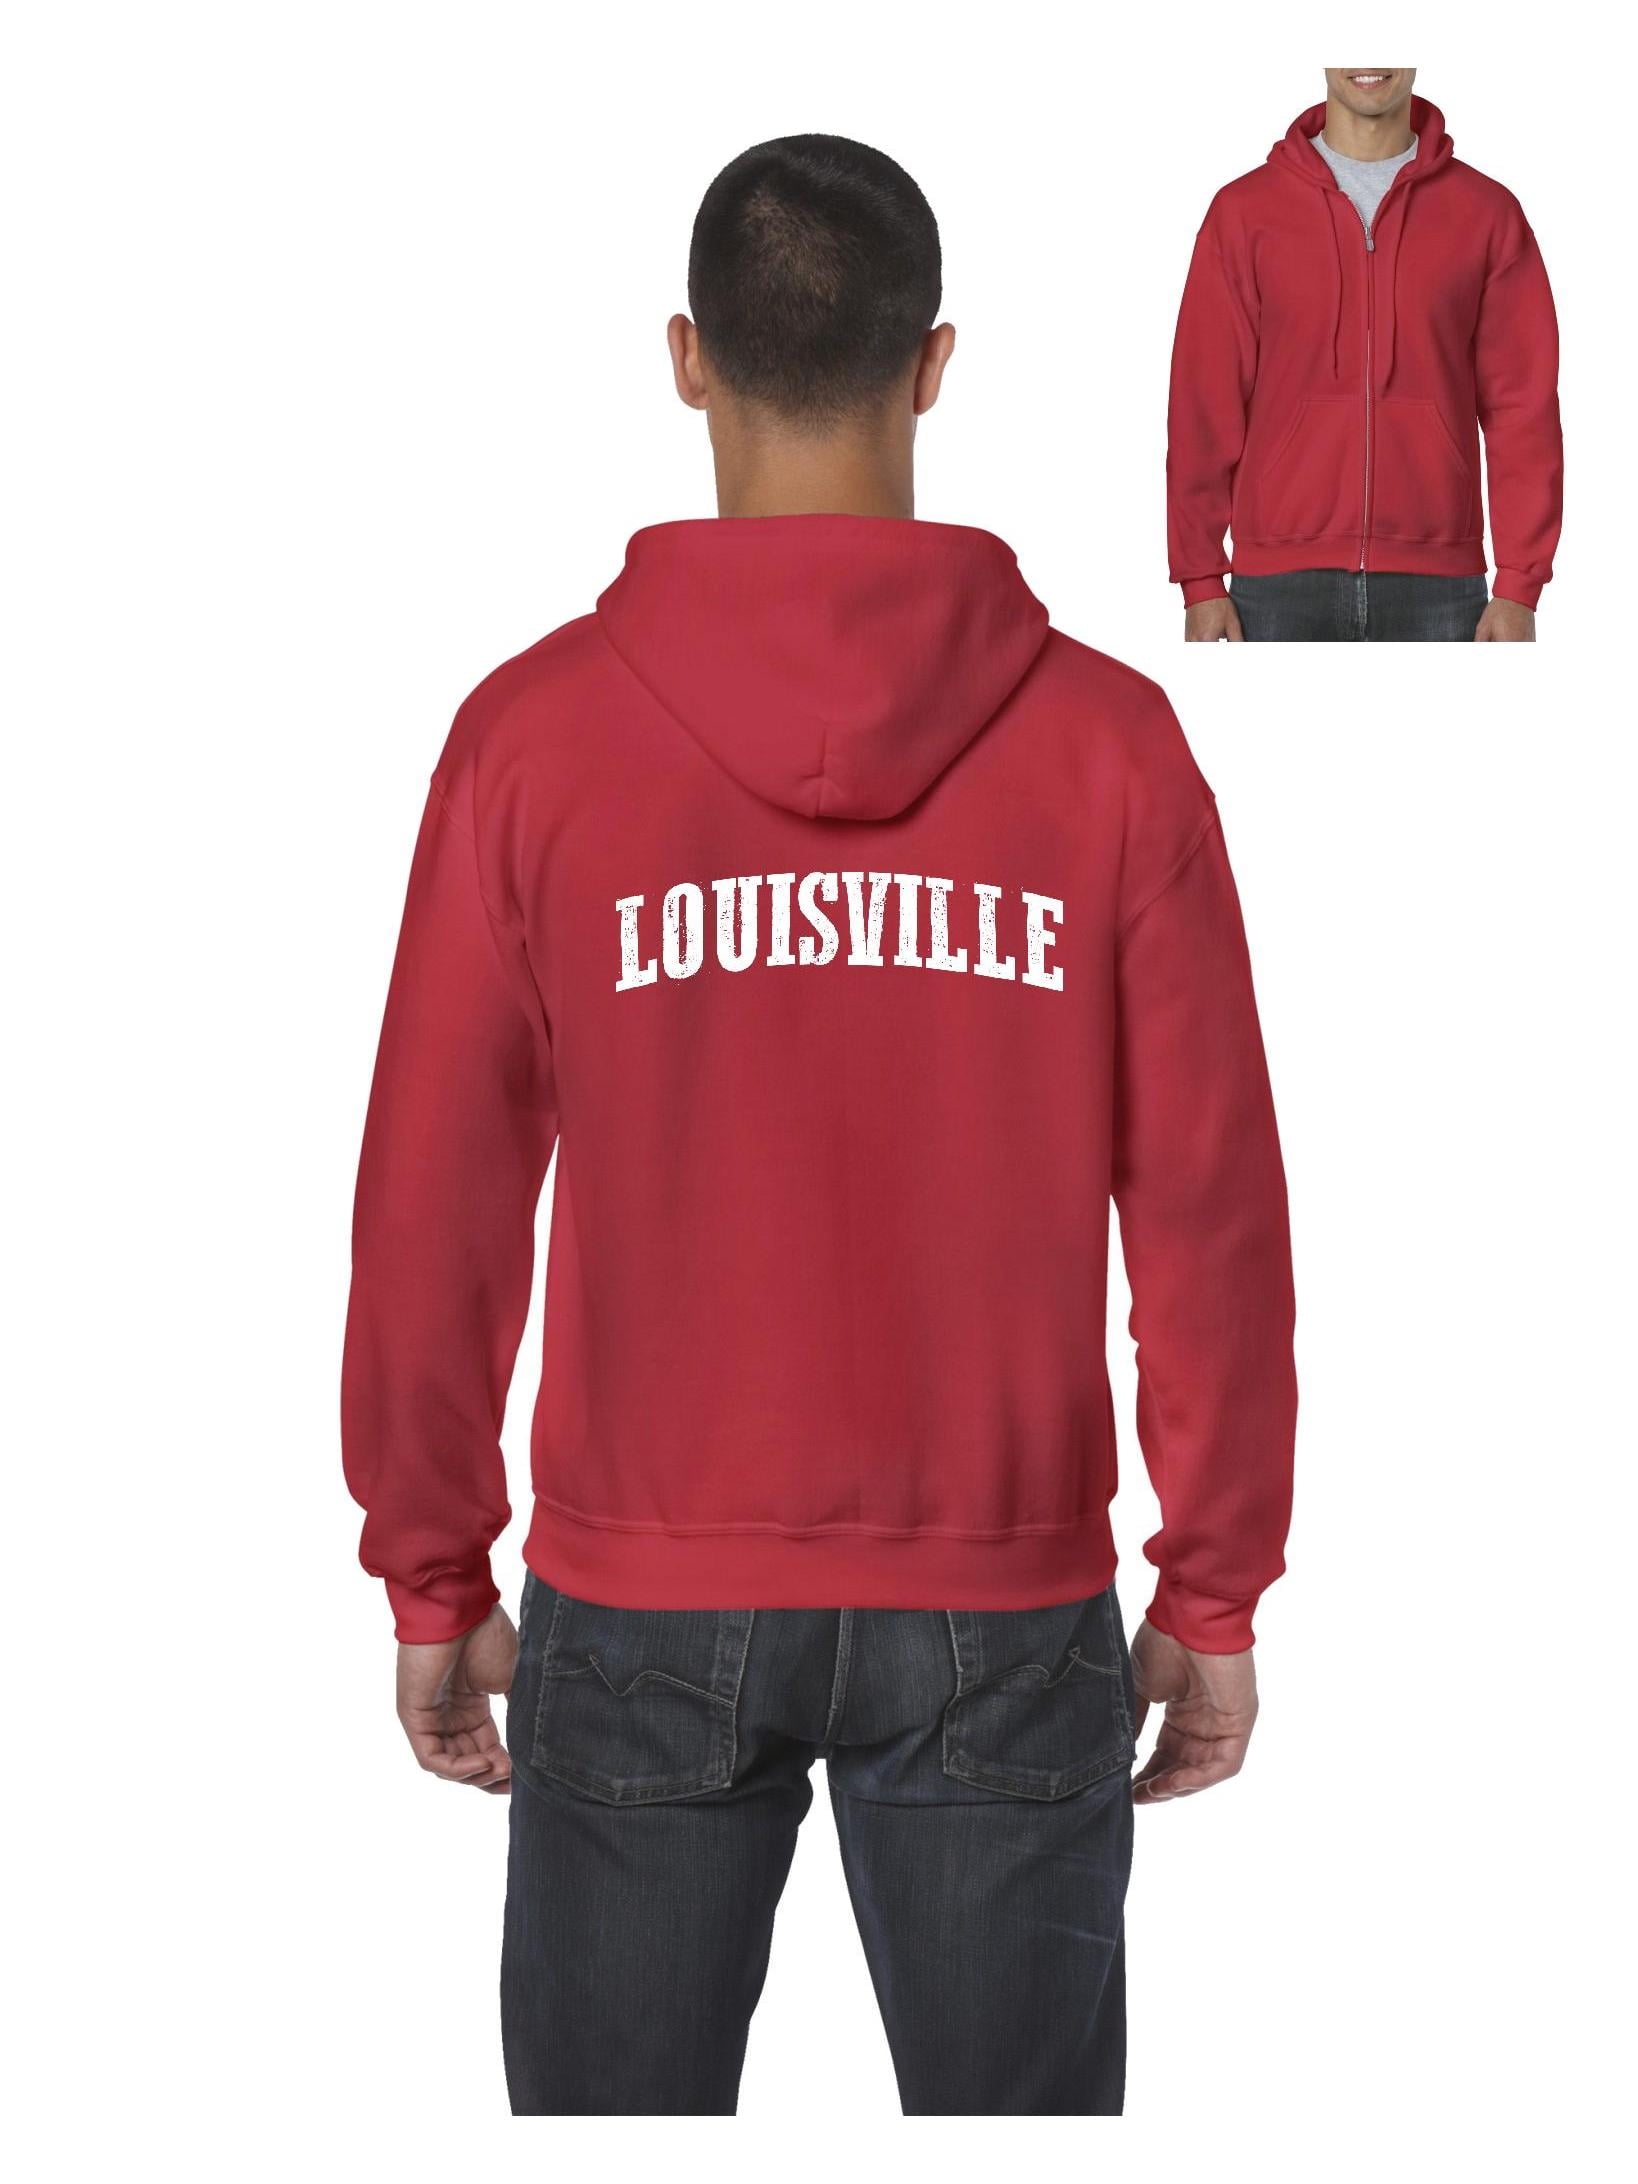 louisville hoodies for men 5xl